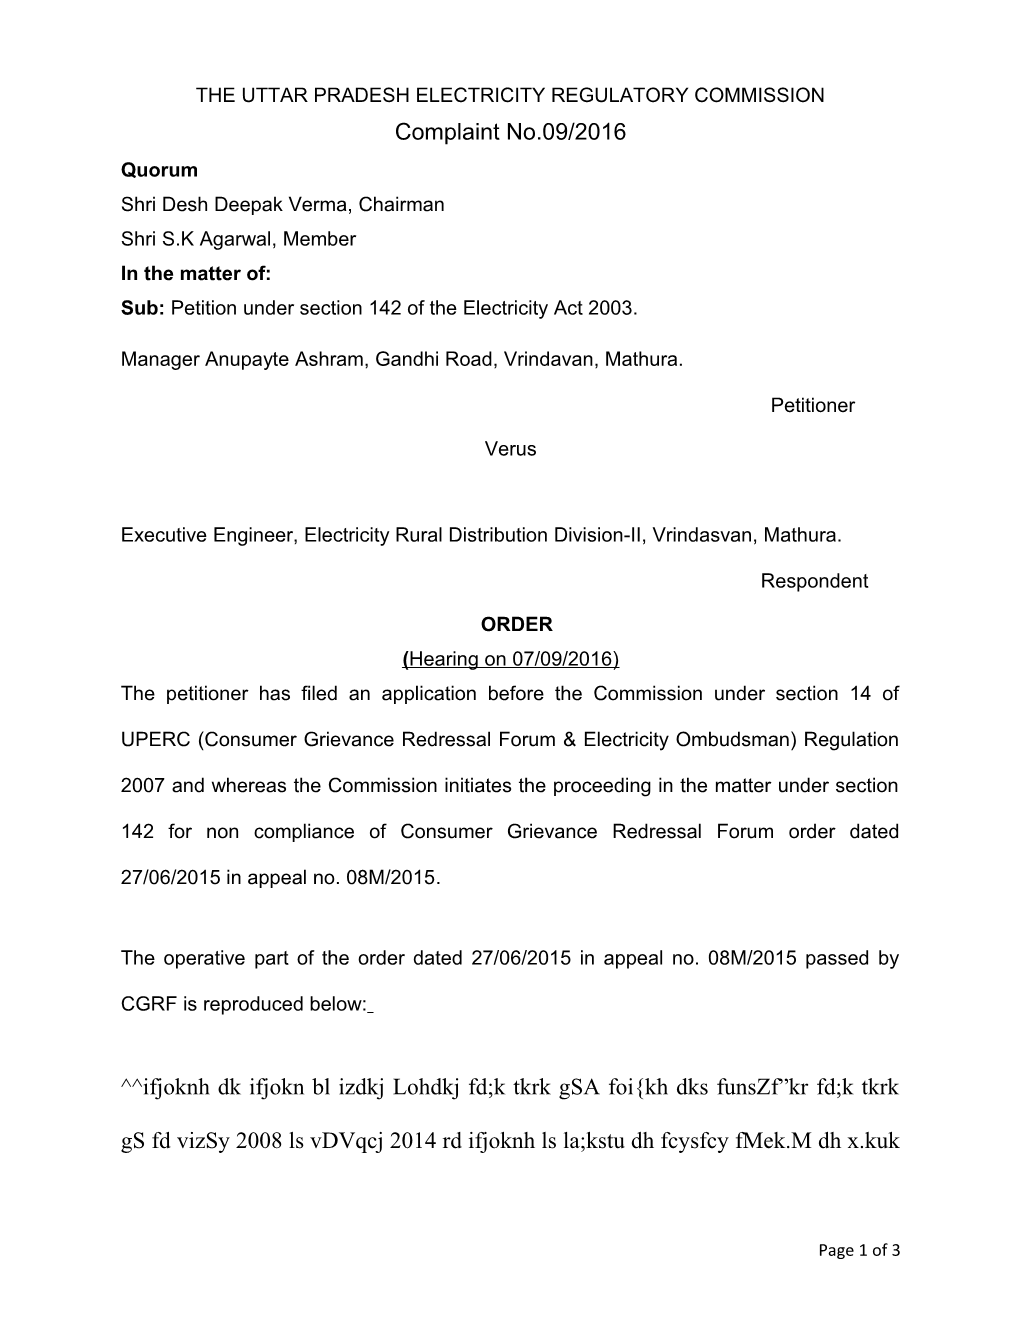 The Uttar Pradesh Electricity Regulatory Commission s1